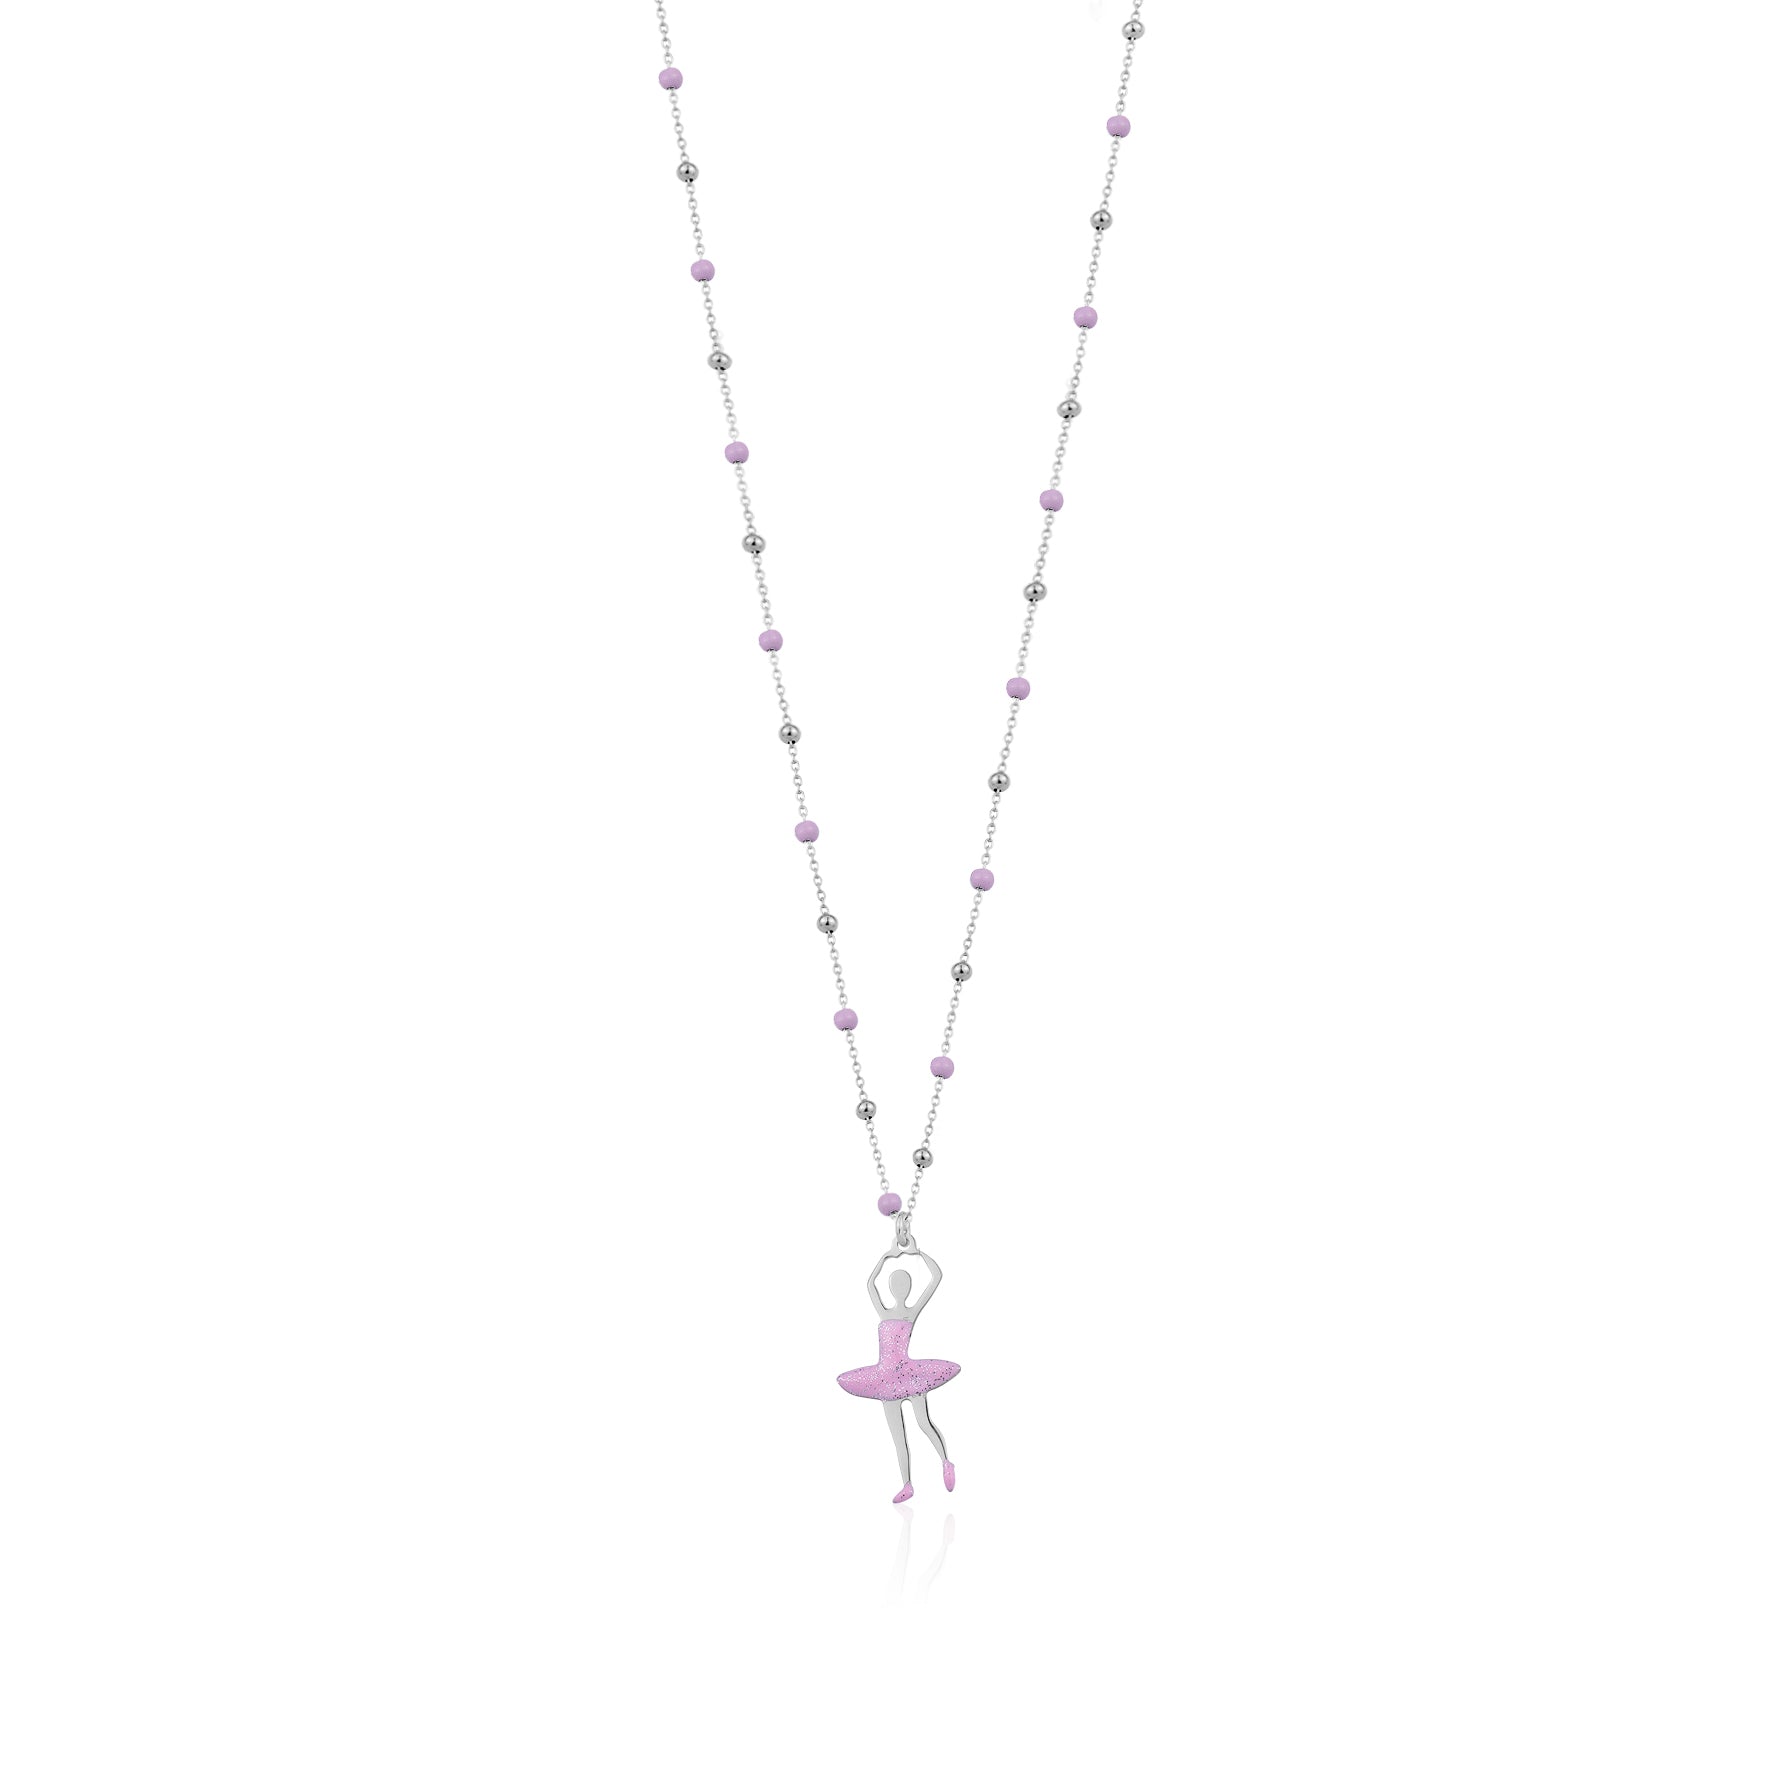 UNICORNJ Sterling Silver Ballerina Ballet Dancer Necklace for Girls Dance Recital with Enamel on Beaded Chain 15.5"